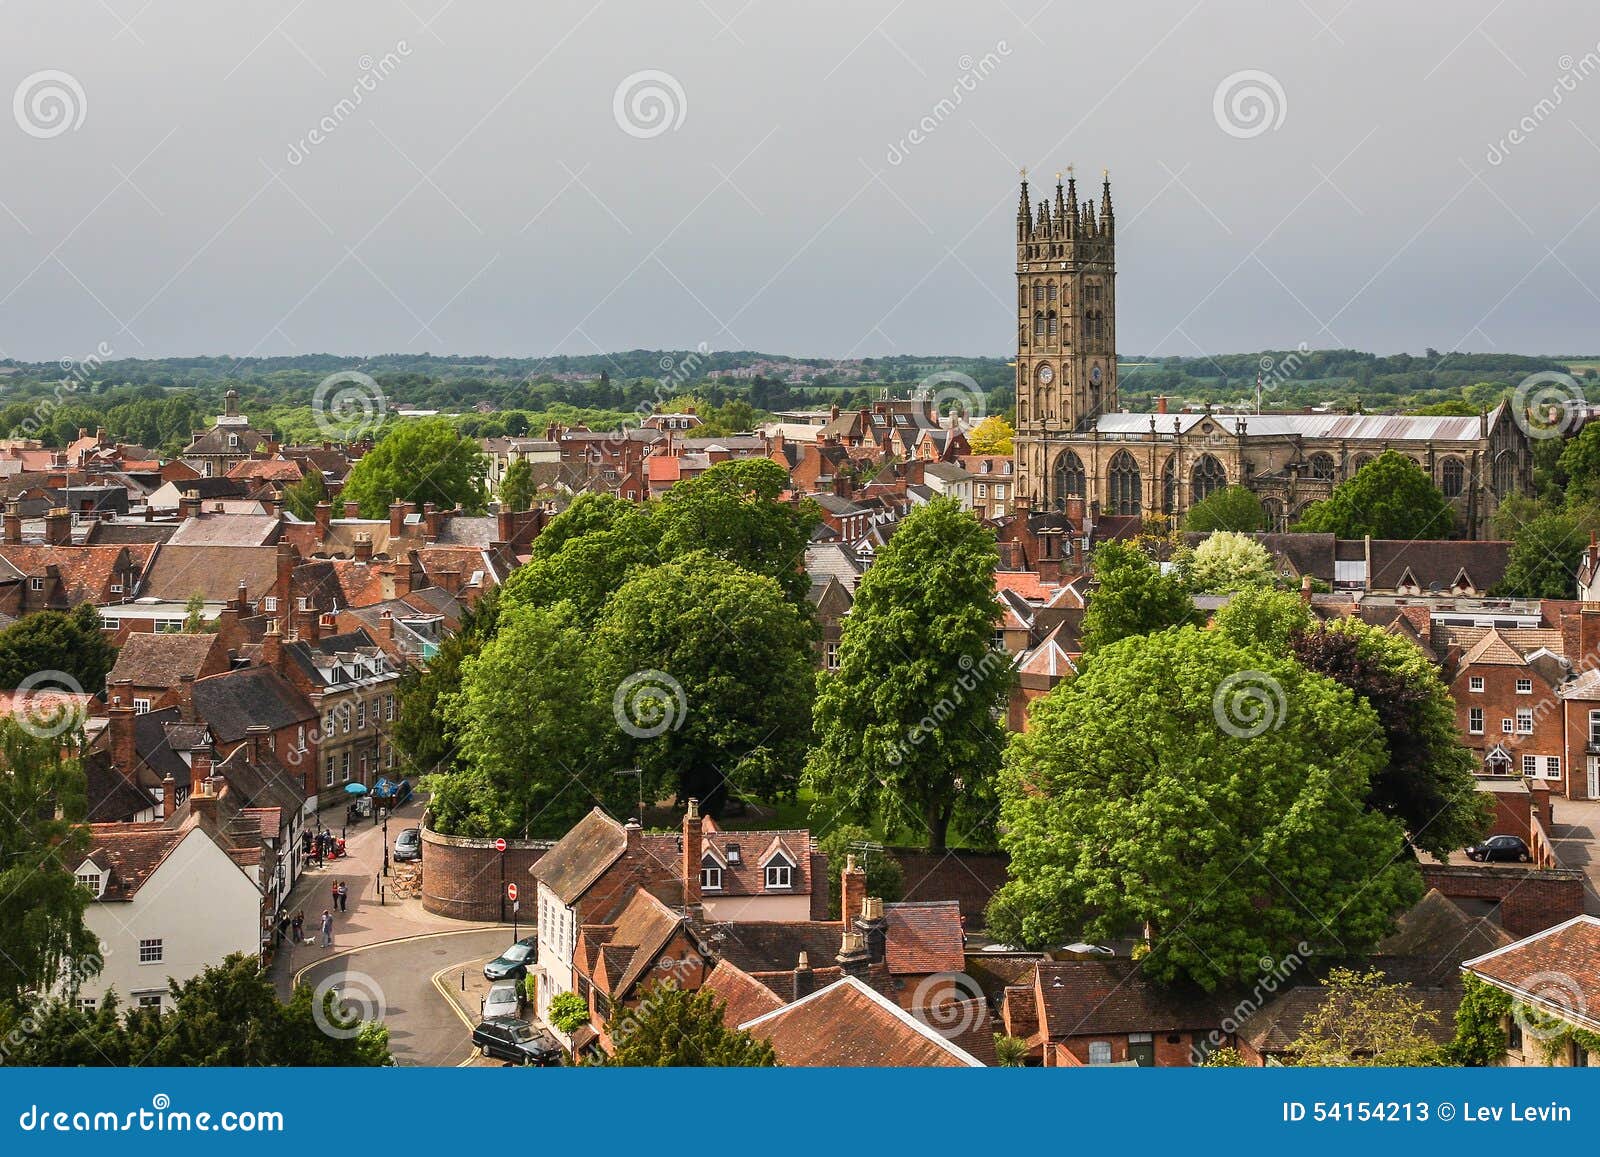 Collegiate Church of St. Mary, Warwick, UK Stock Image - Image of